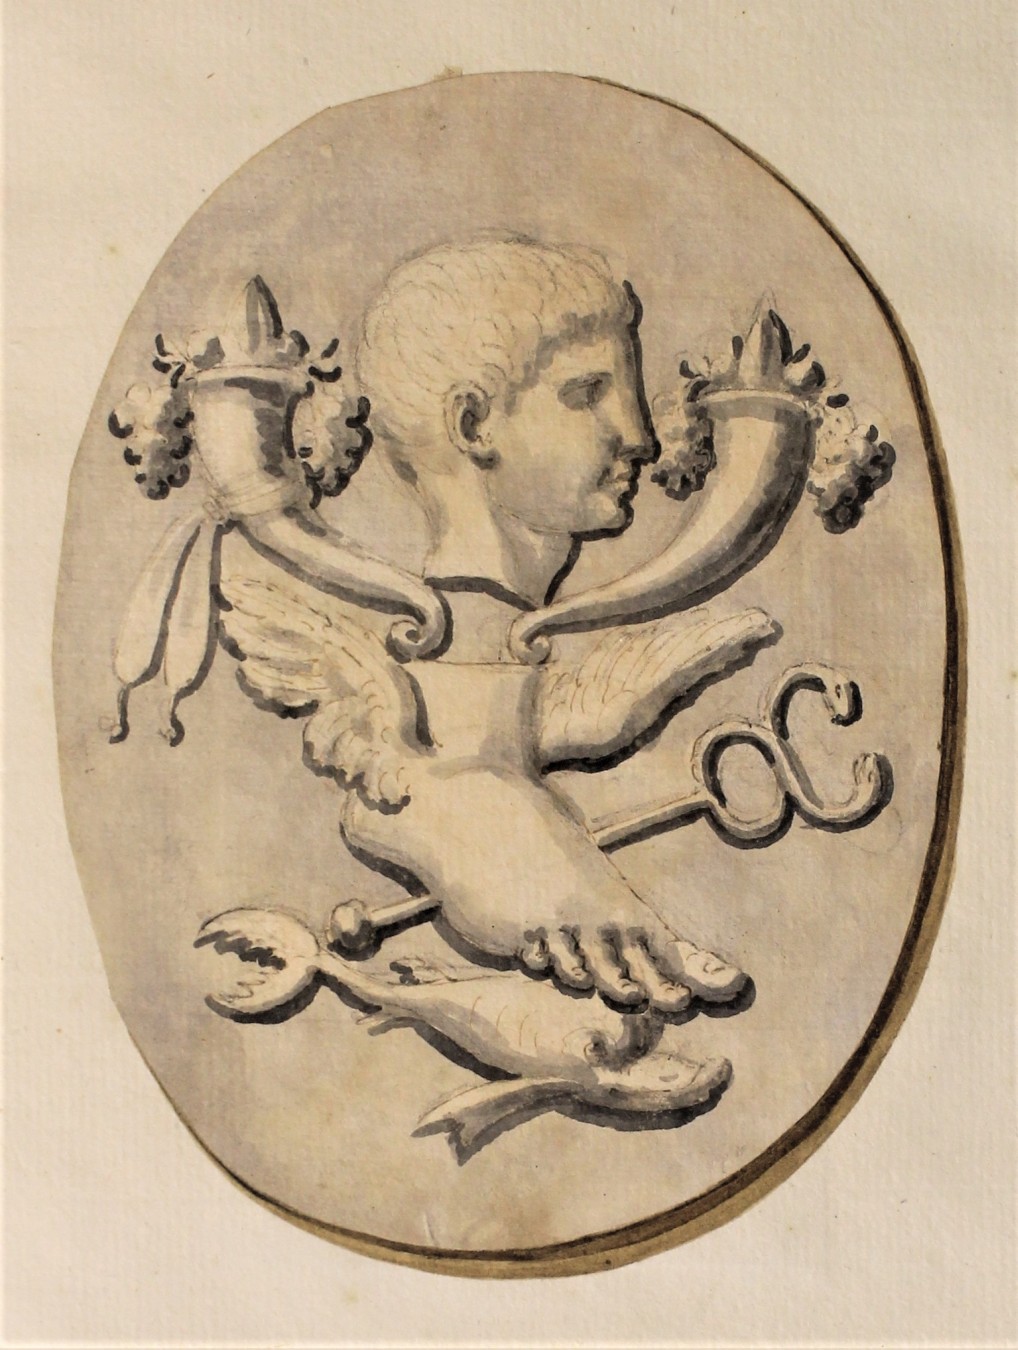 Gem depicting Octavian and symbols of prosperity